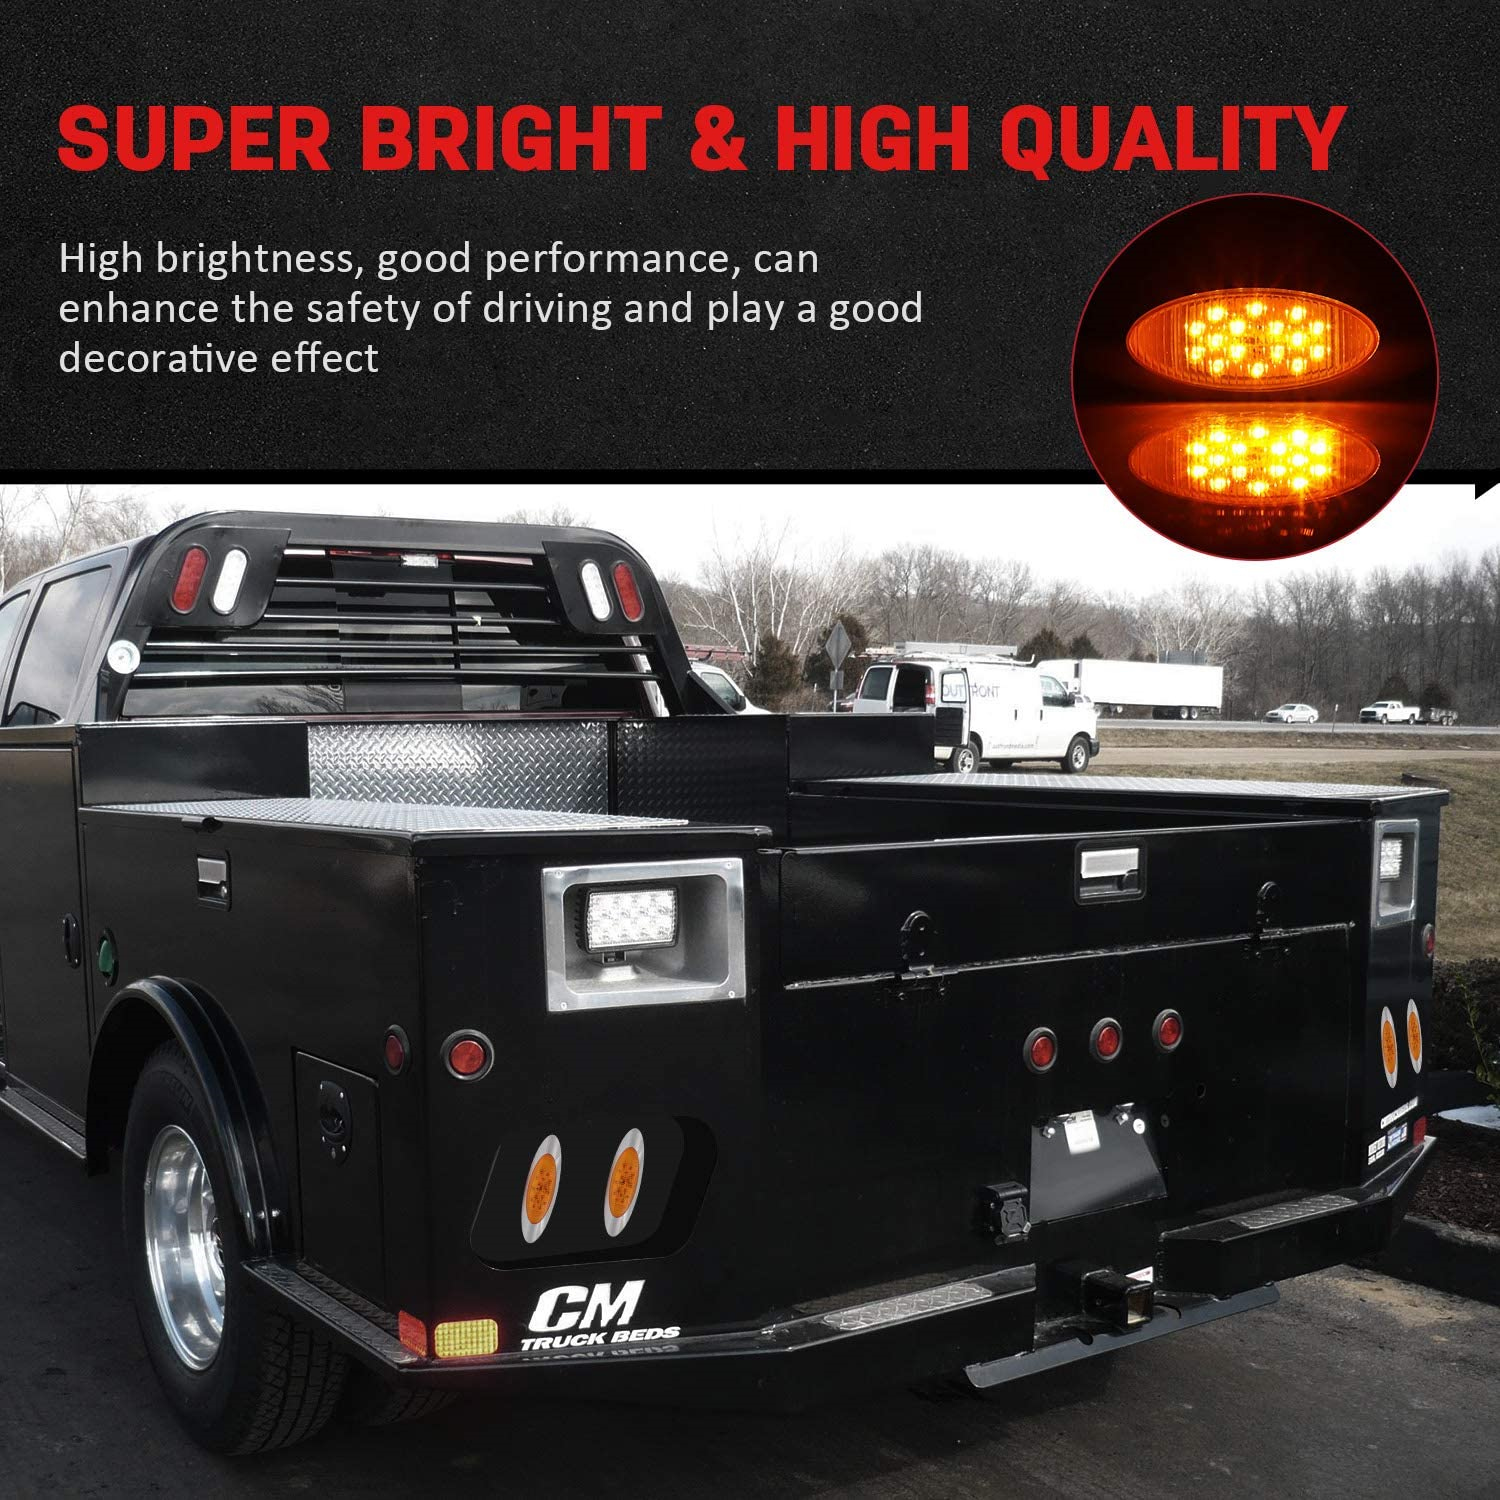 5PCS Universal Amber Side Marker Light Tail Lamps 16LED Oval Chrome for Truck Trailer Pickup